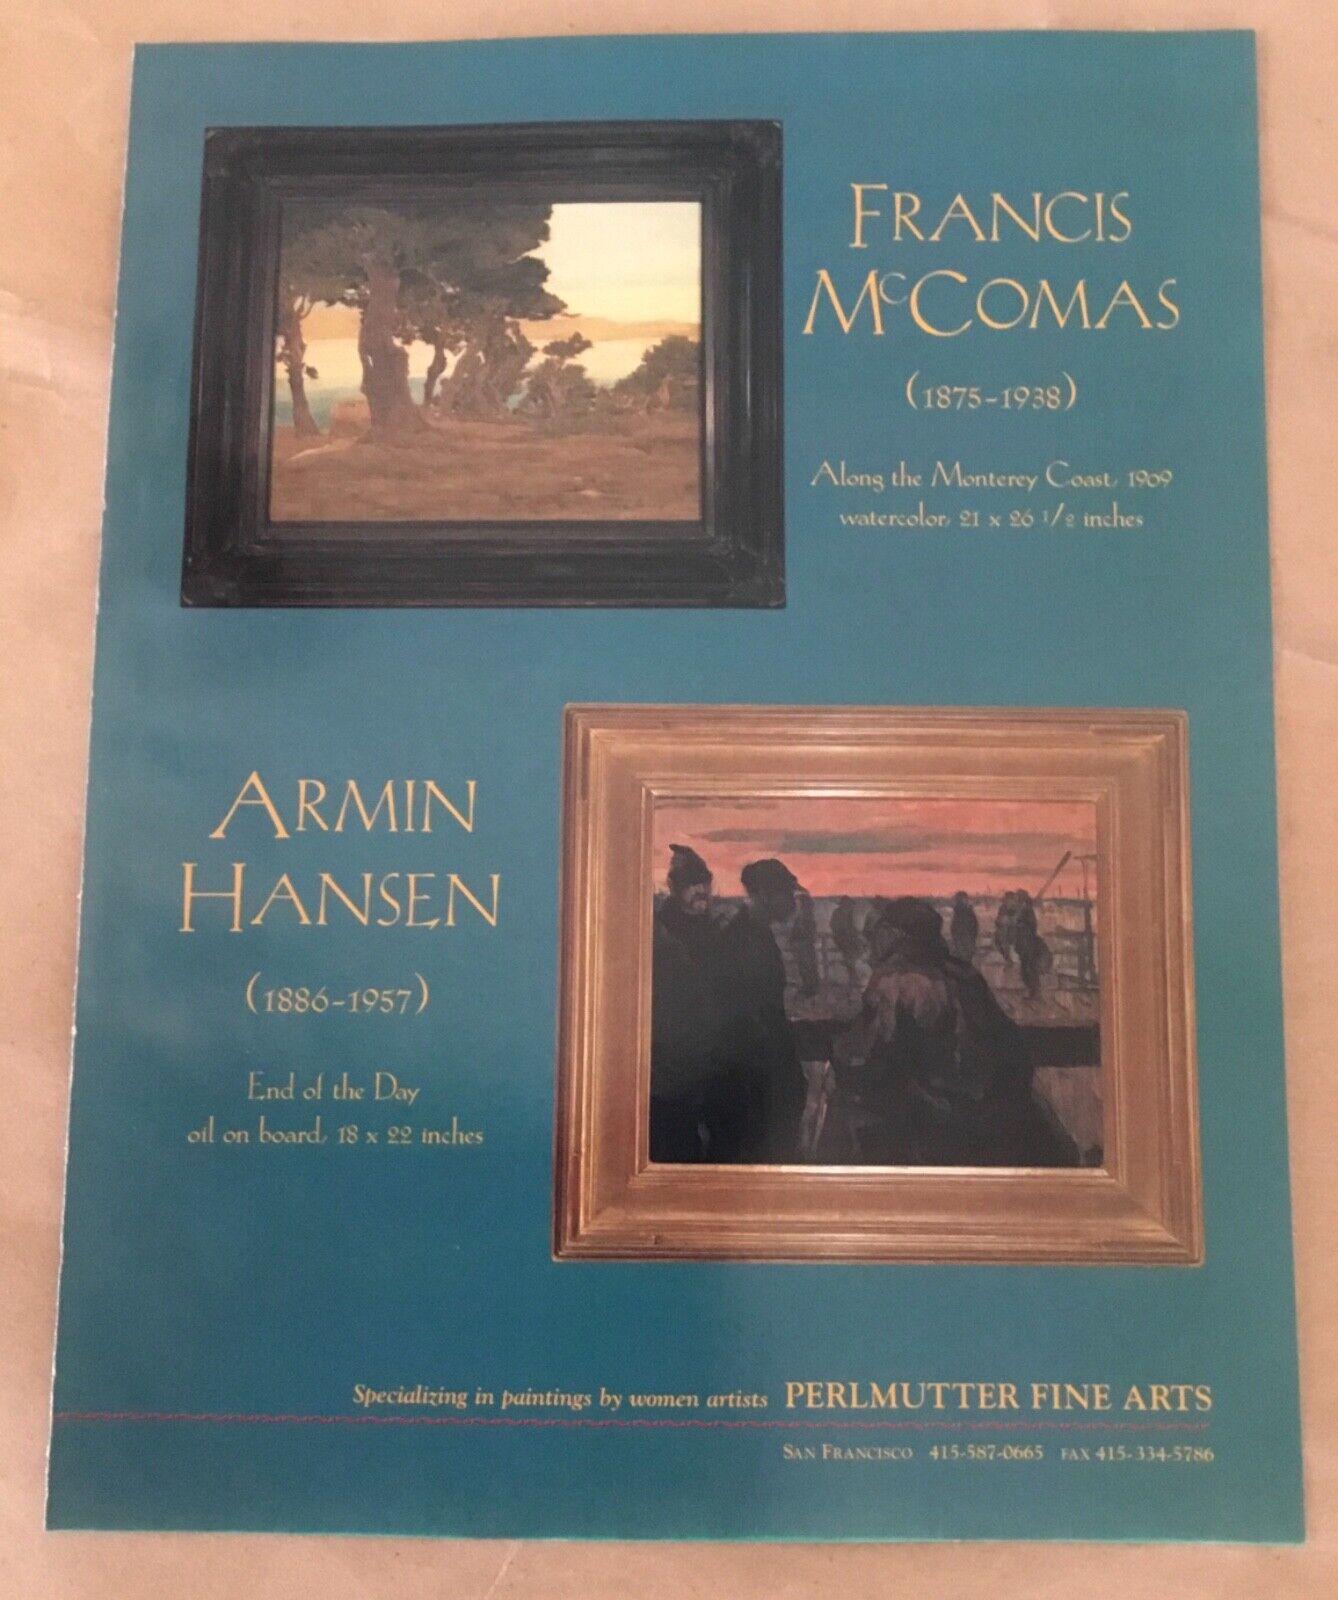 Francis McComas Armin Hansen gallery exhibition ad 1997 vntge art magazine print